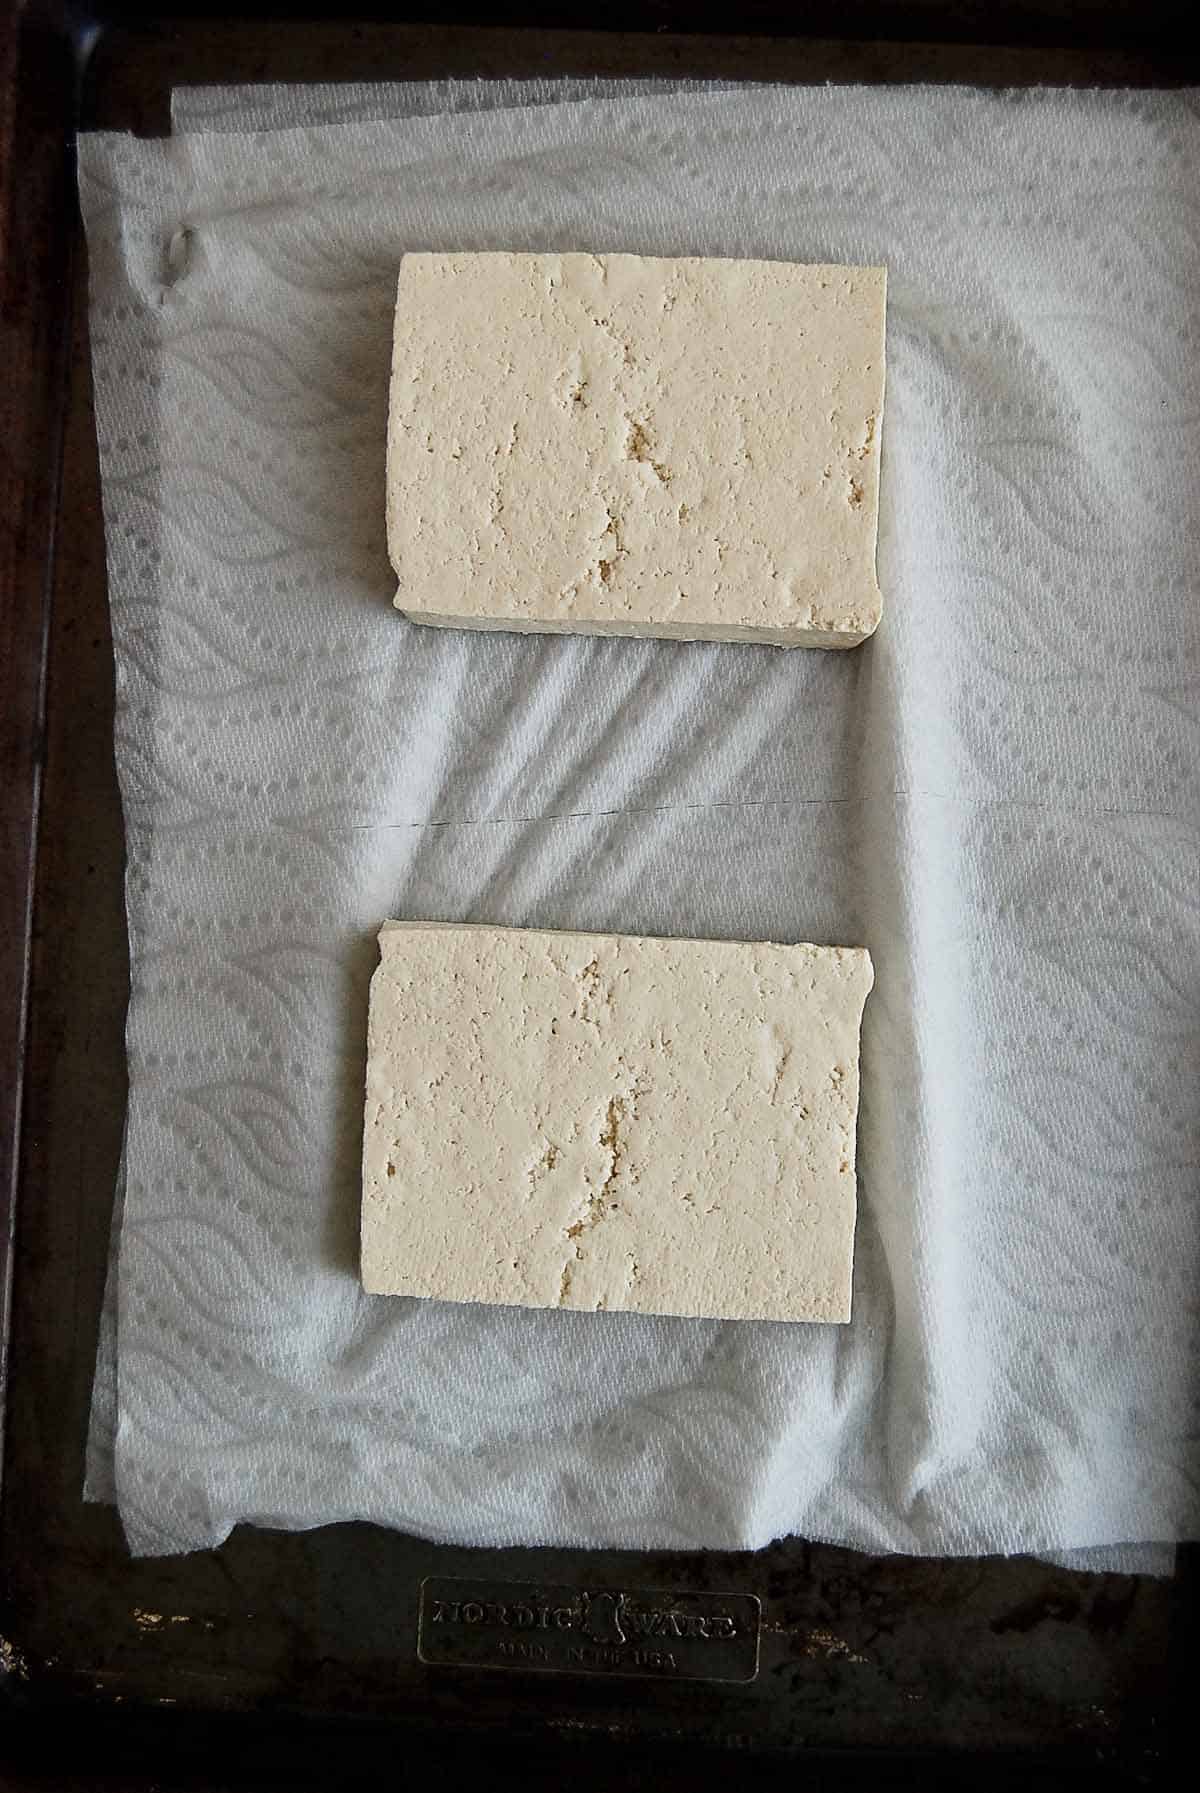 blocks of tofu on paper towel lined baking sheet.